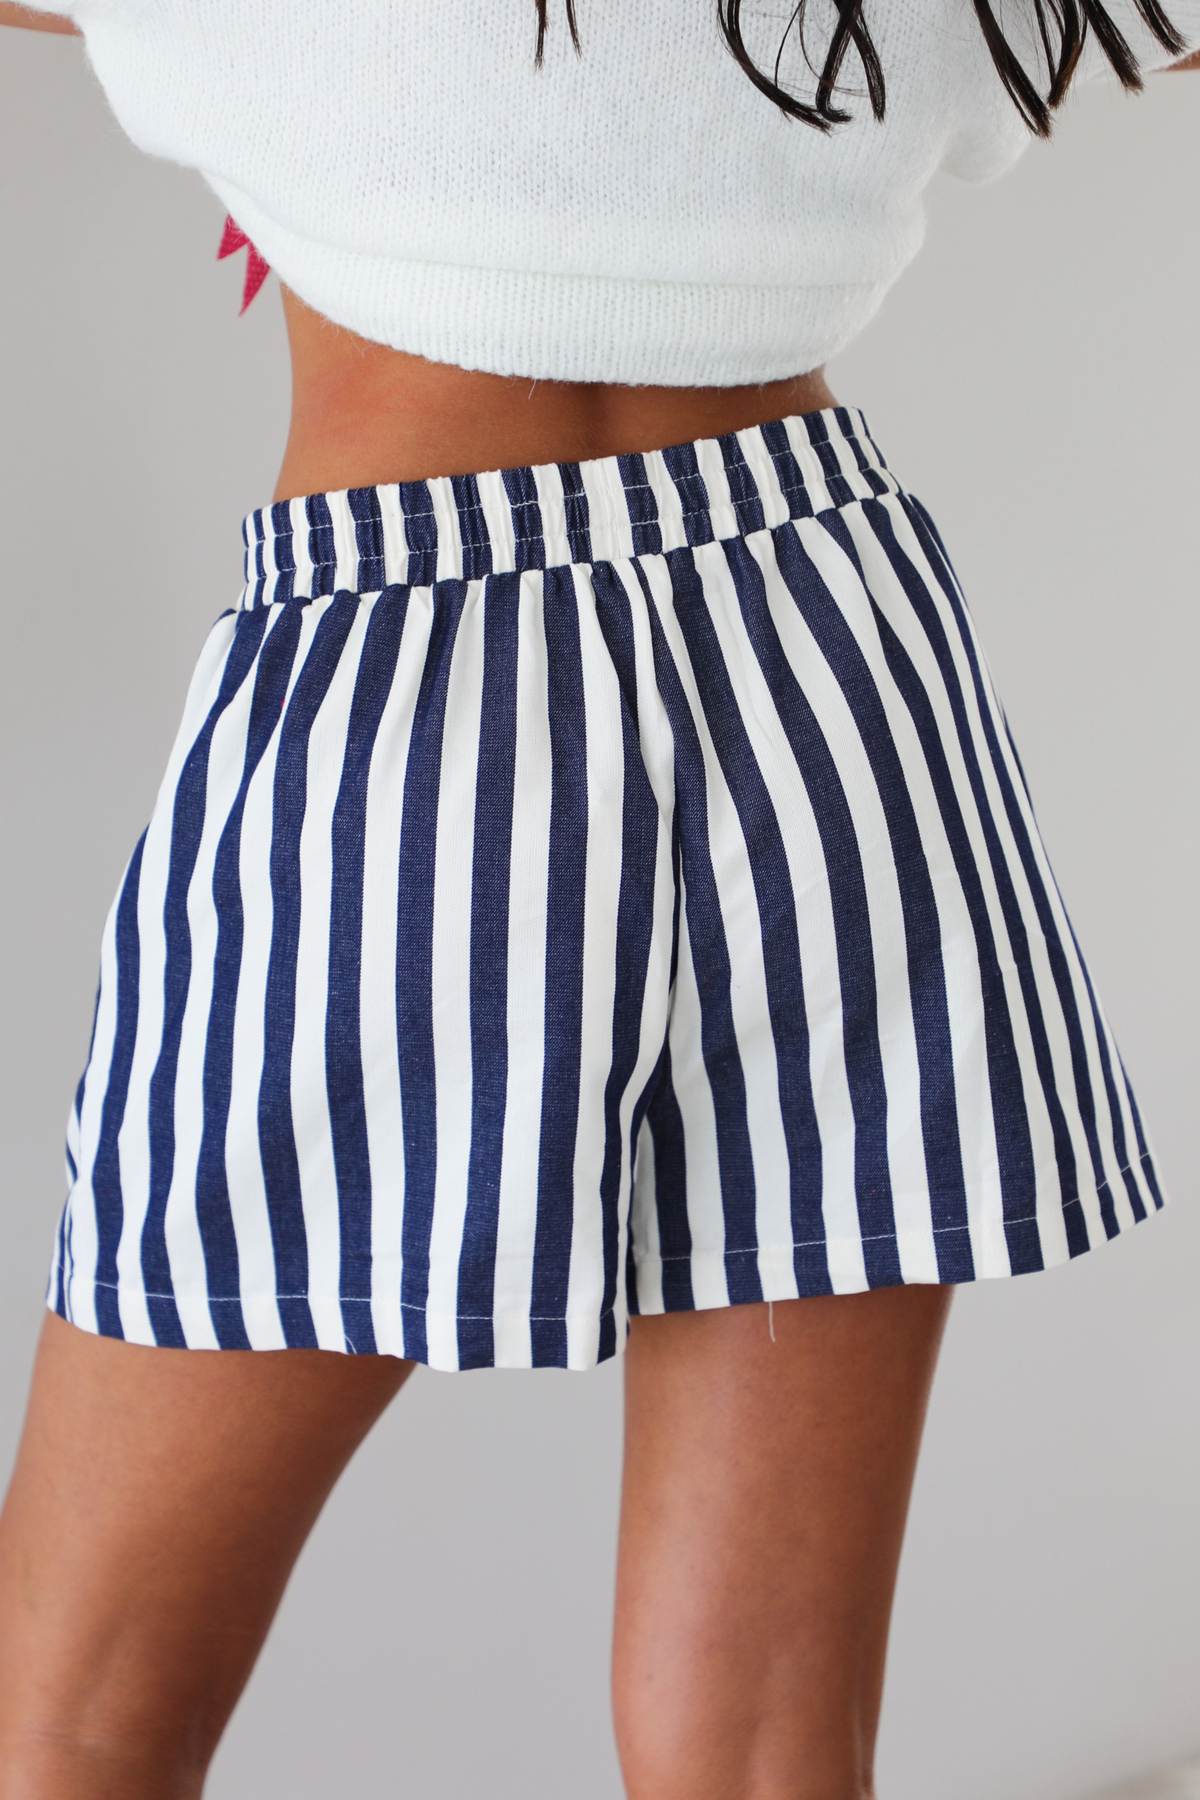 Don't Hesitate Stripe Denim Shorts: Blue/Ivory